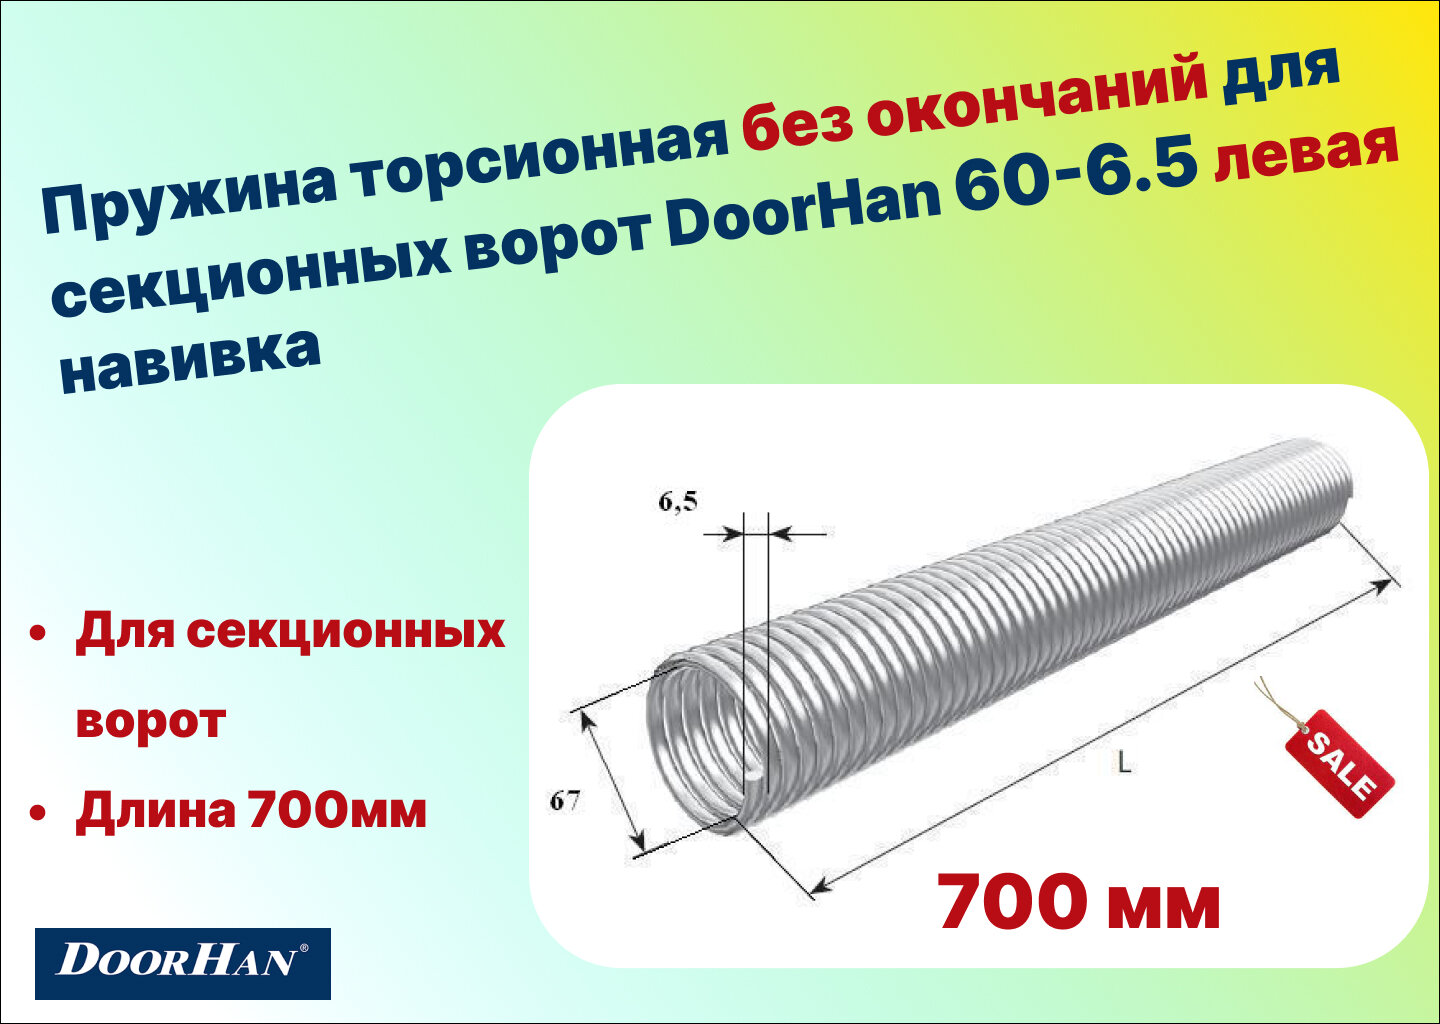 Пружина торсионная без окончаний для секционных ворот DoorHan 60-6.5 левая навивка длина 700 мм (33065/mL/RAL7004)